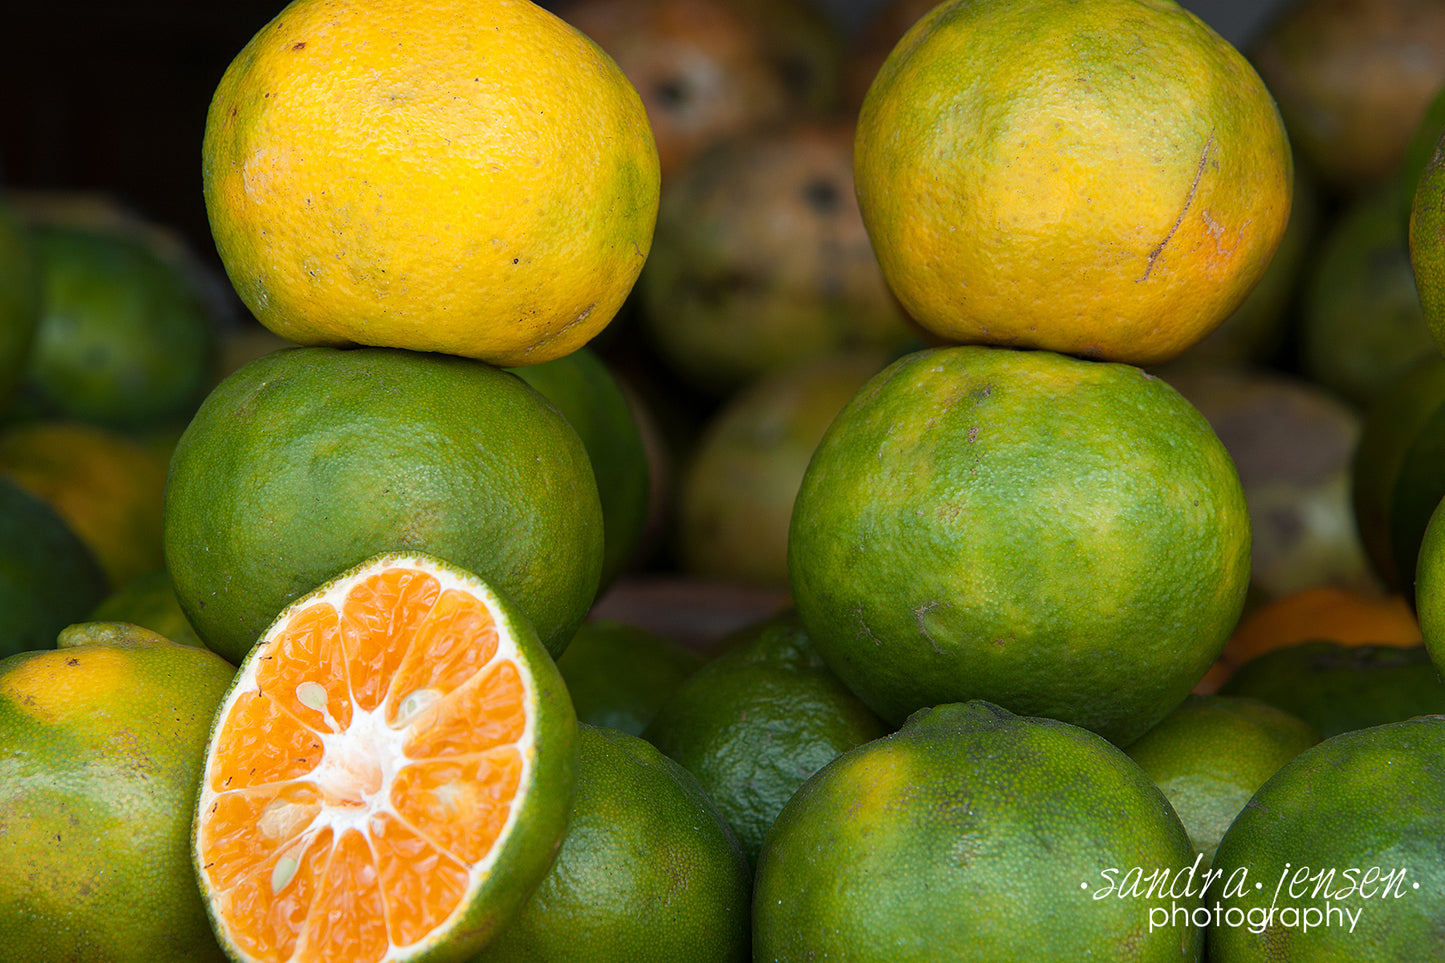 Print - Zanzibar, Tanzania - Oranges in Market Stall in Stonetown